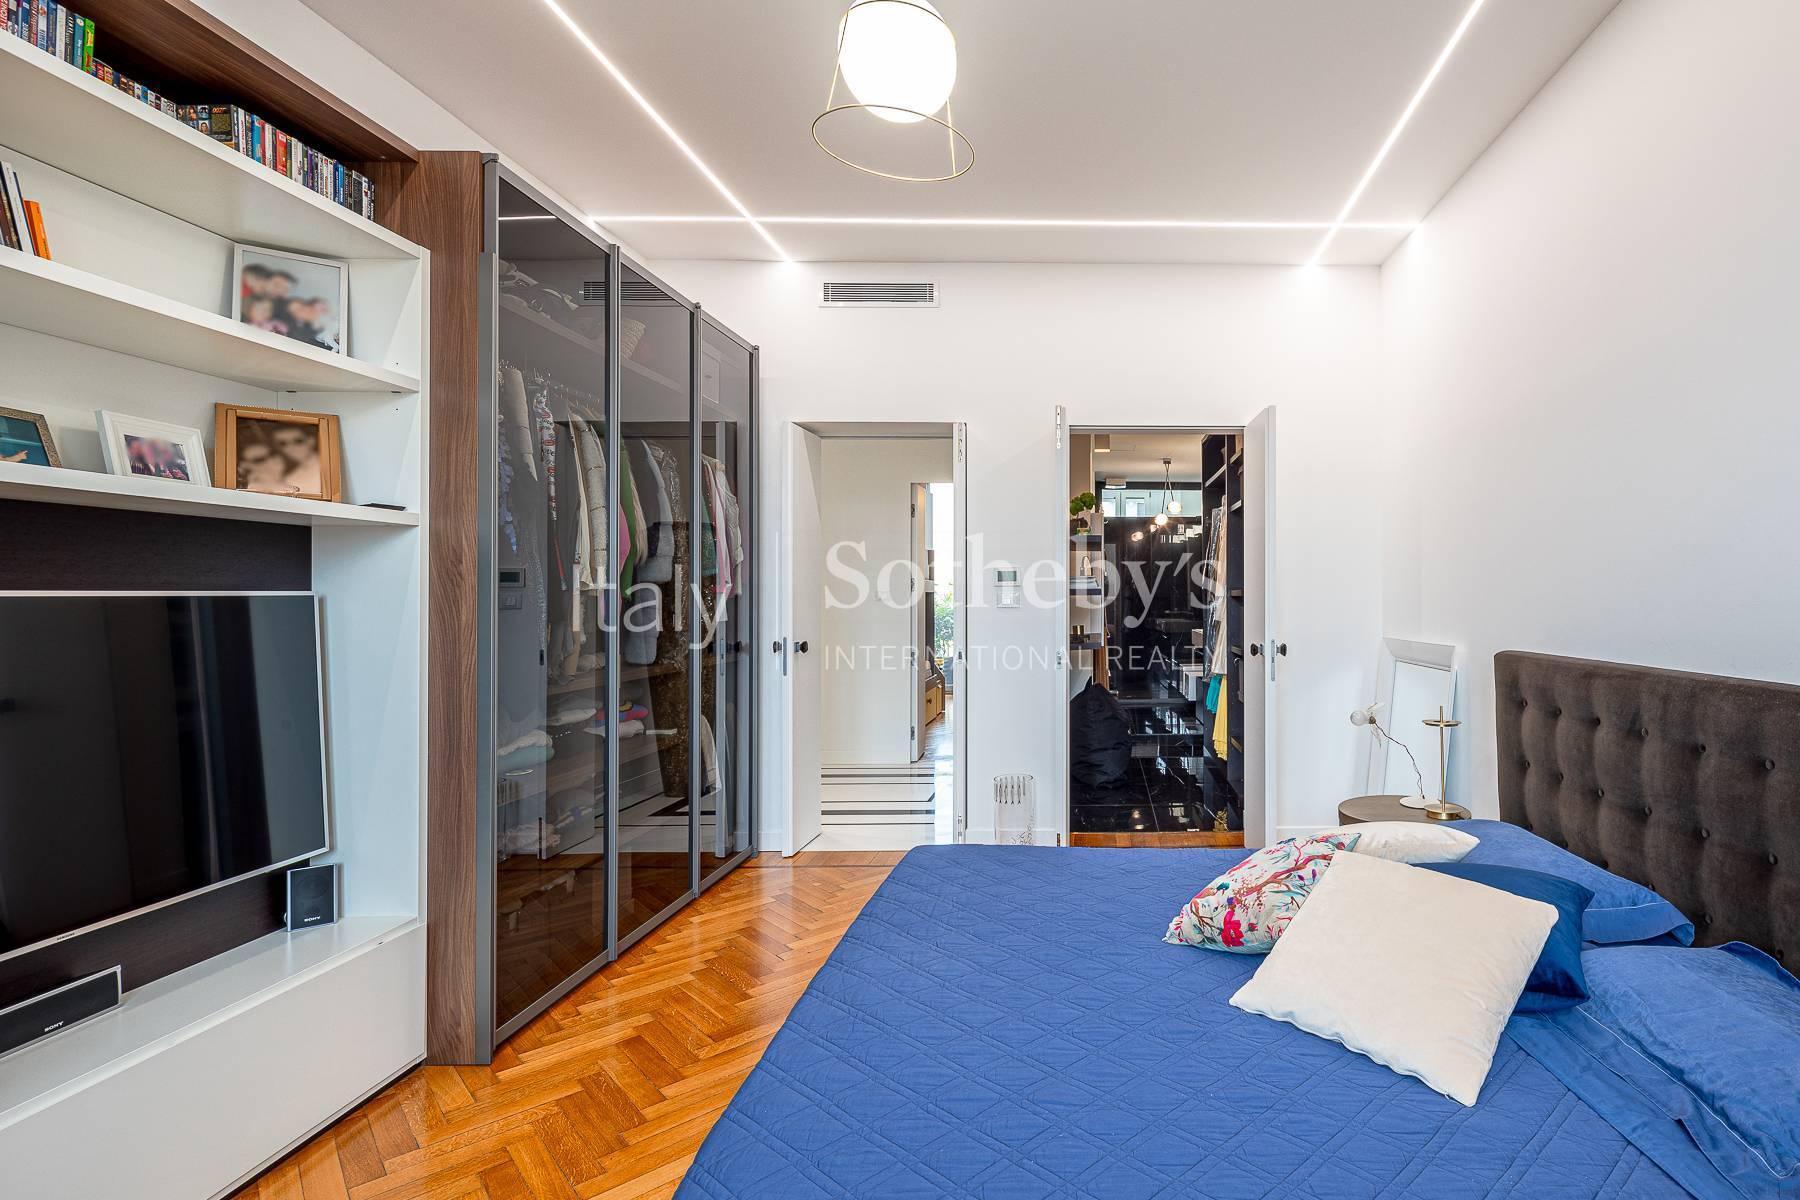 Superb furnished apartment in the Bianca di Savoia / Quadronno area - 12